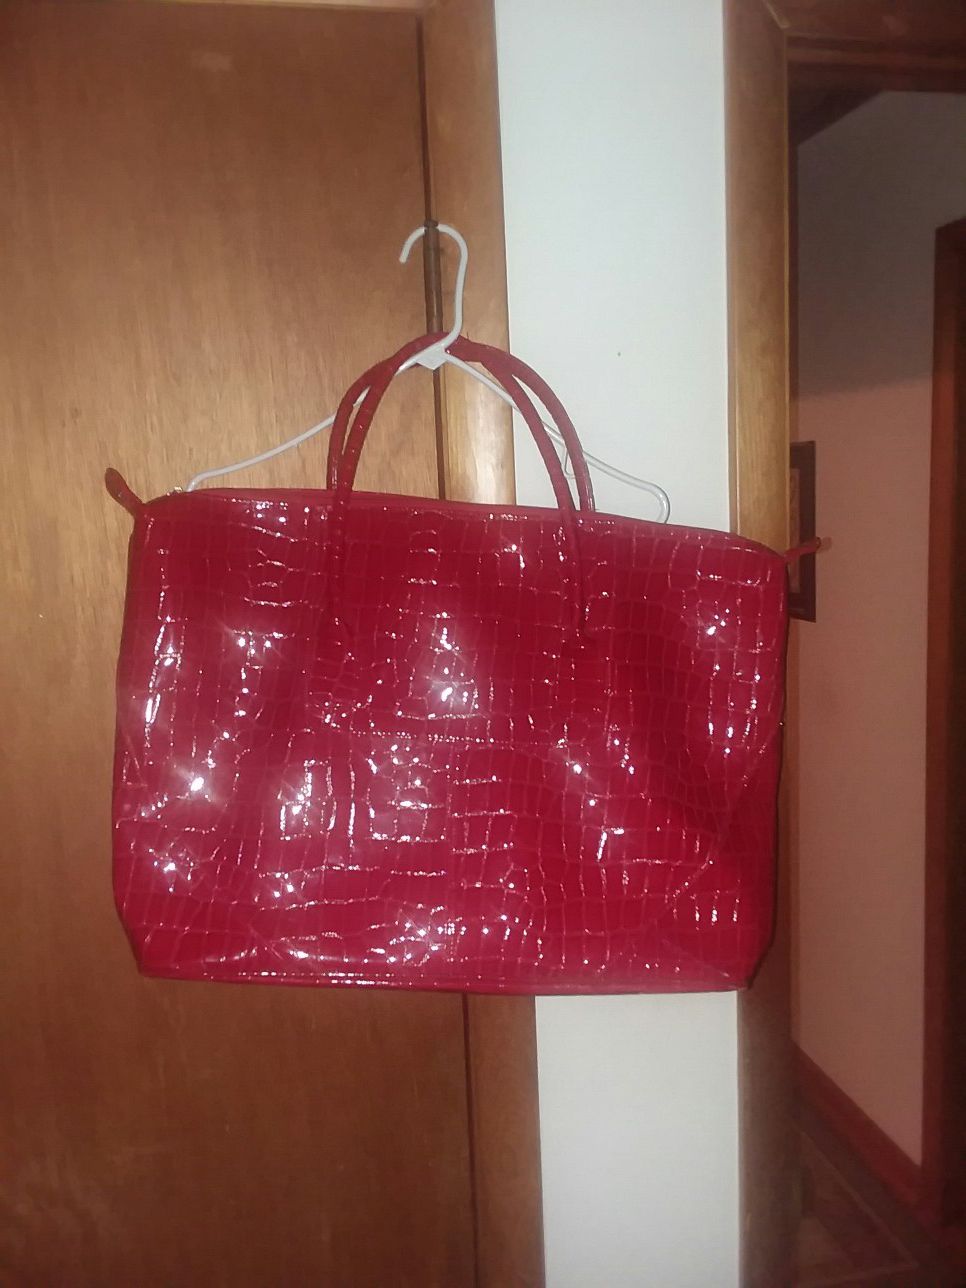 Large red tote bag